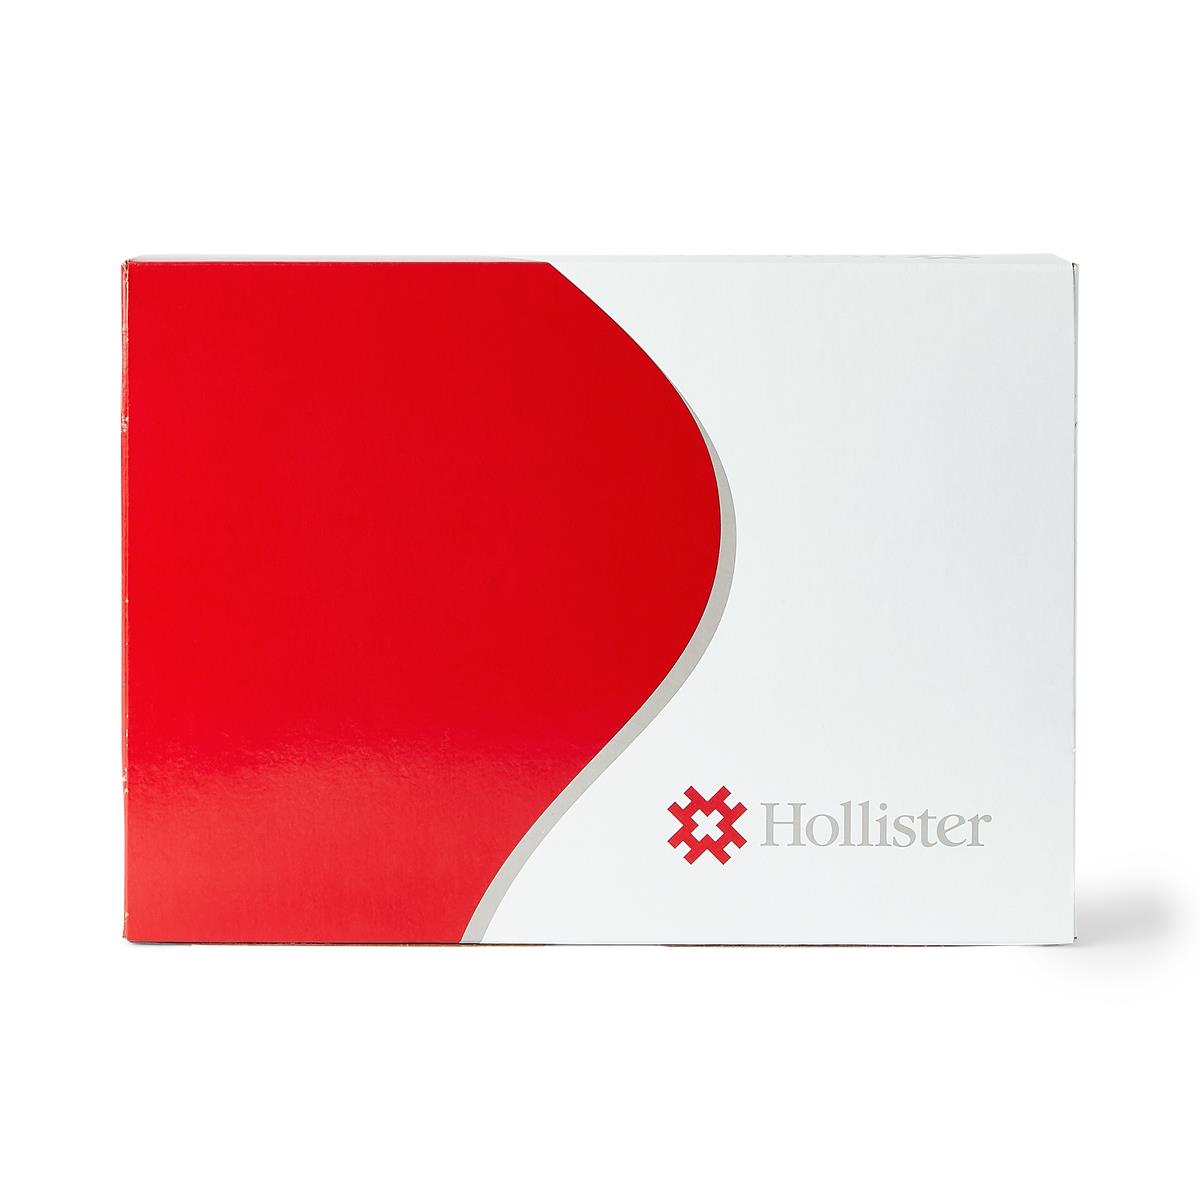 Hollister 11504 New Image CeraPlus™ Precut Ostomy Barrier - Box of 5